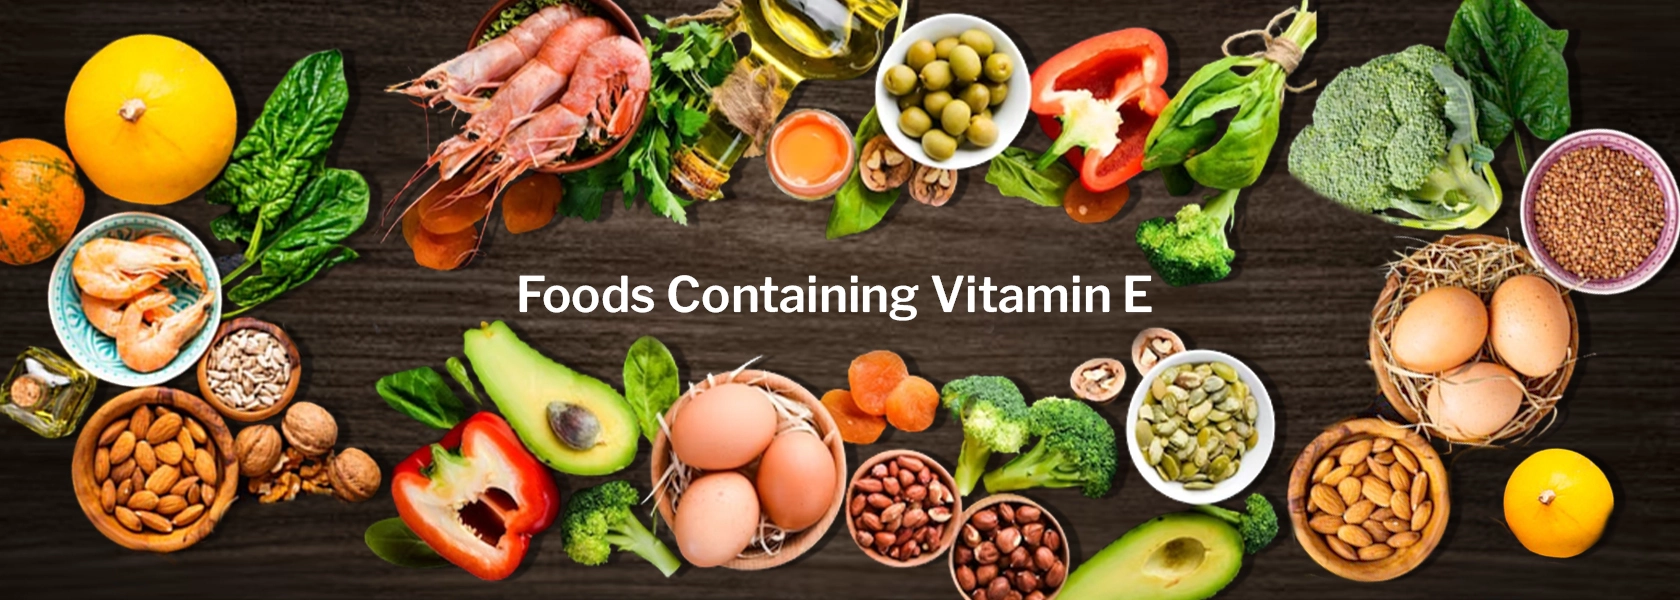 foods containing vitamin e